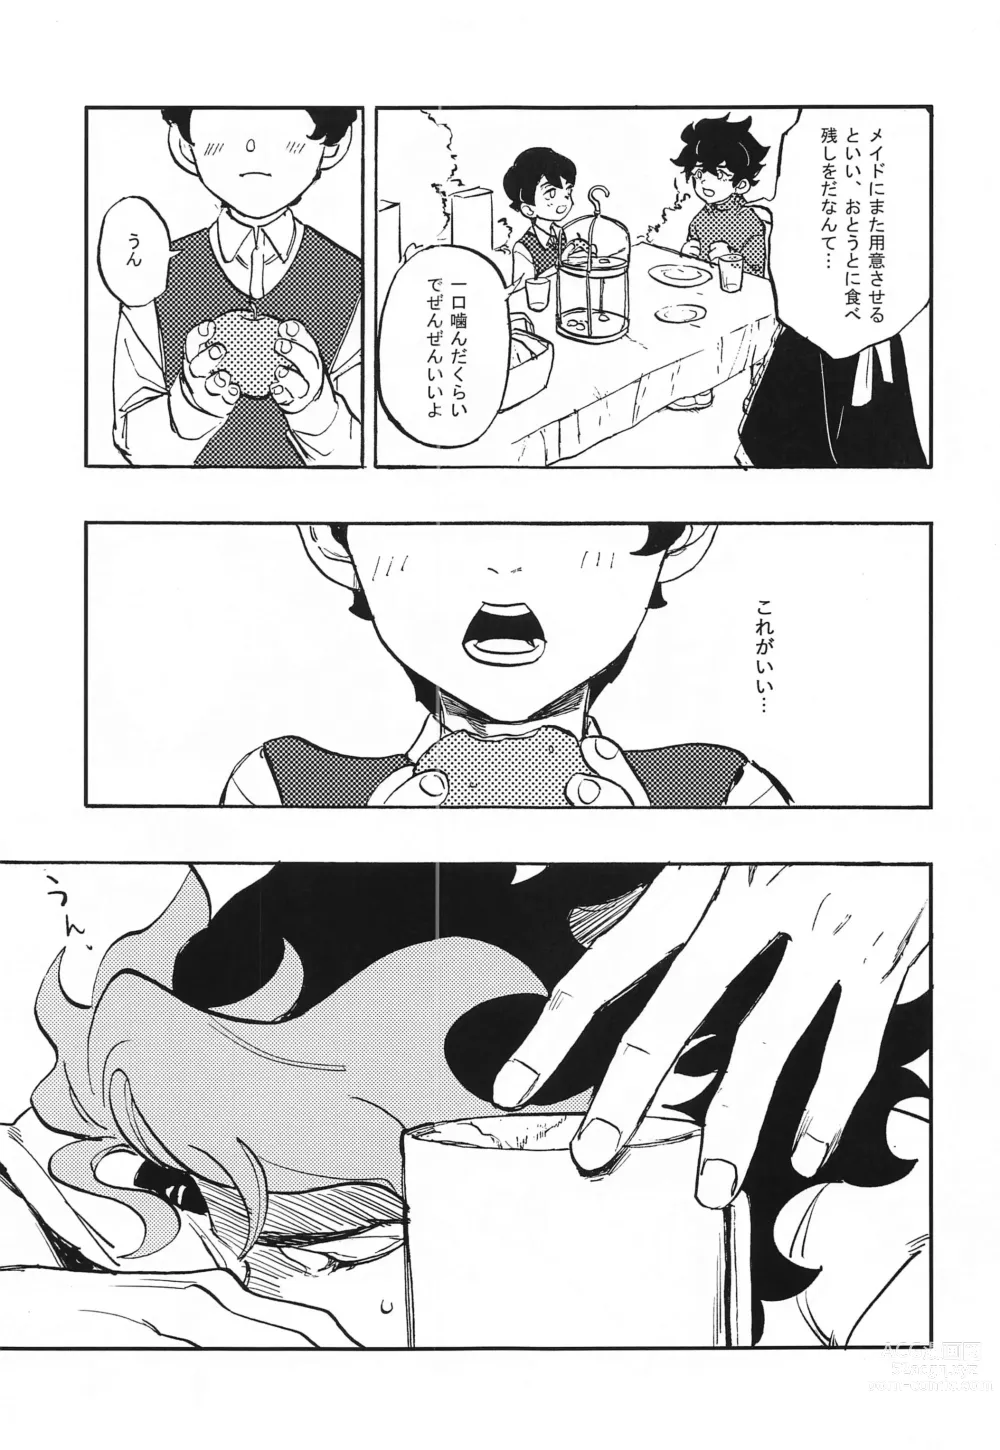 Page 6 of doujinshi MILK